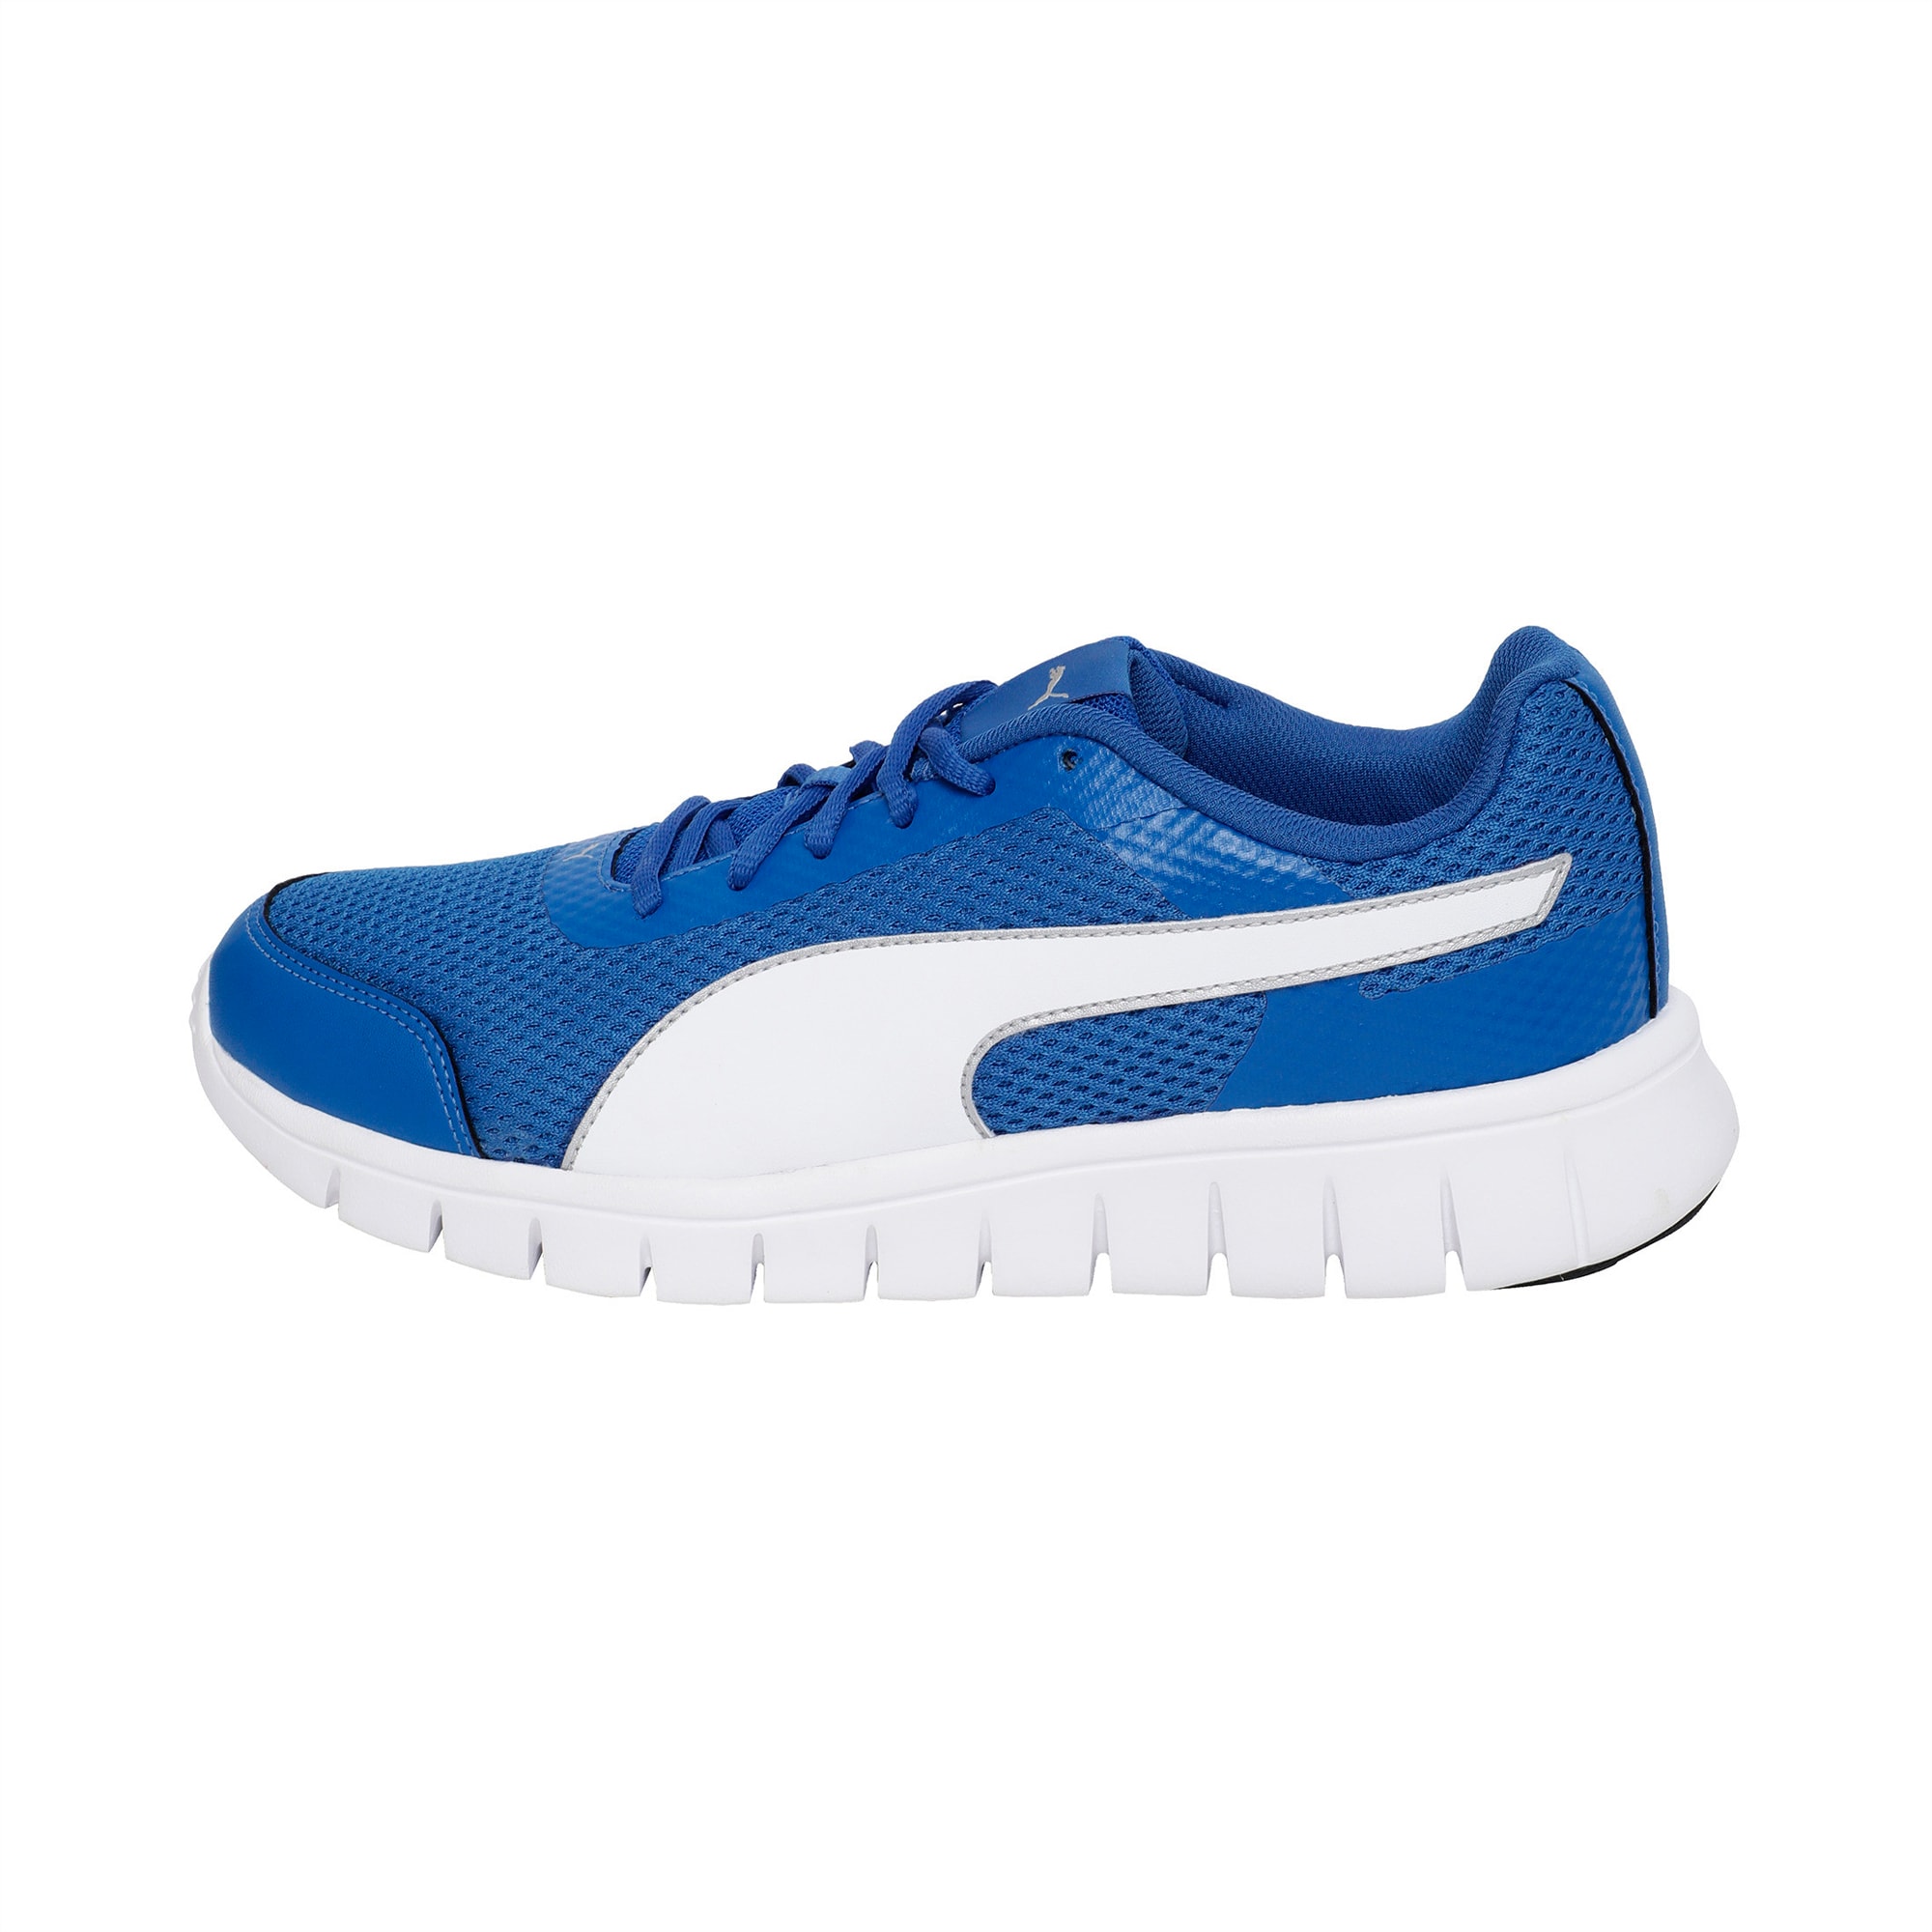 puma white & blue running shoes